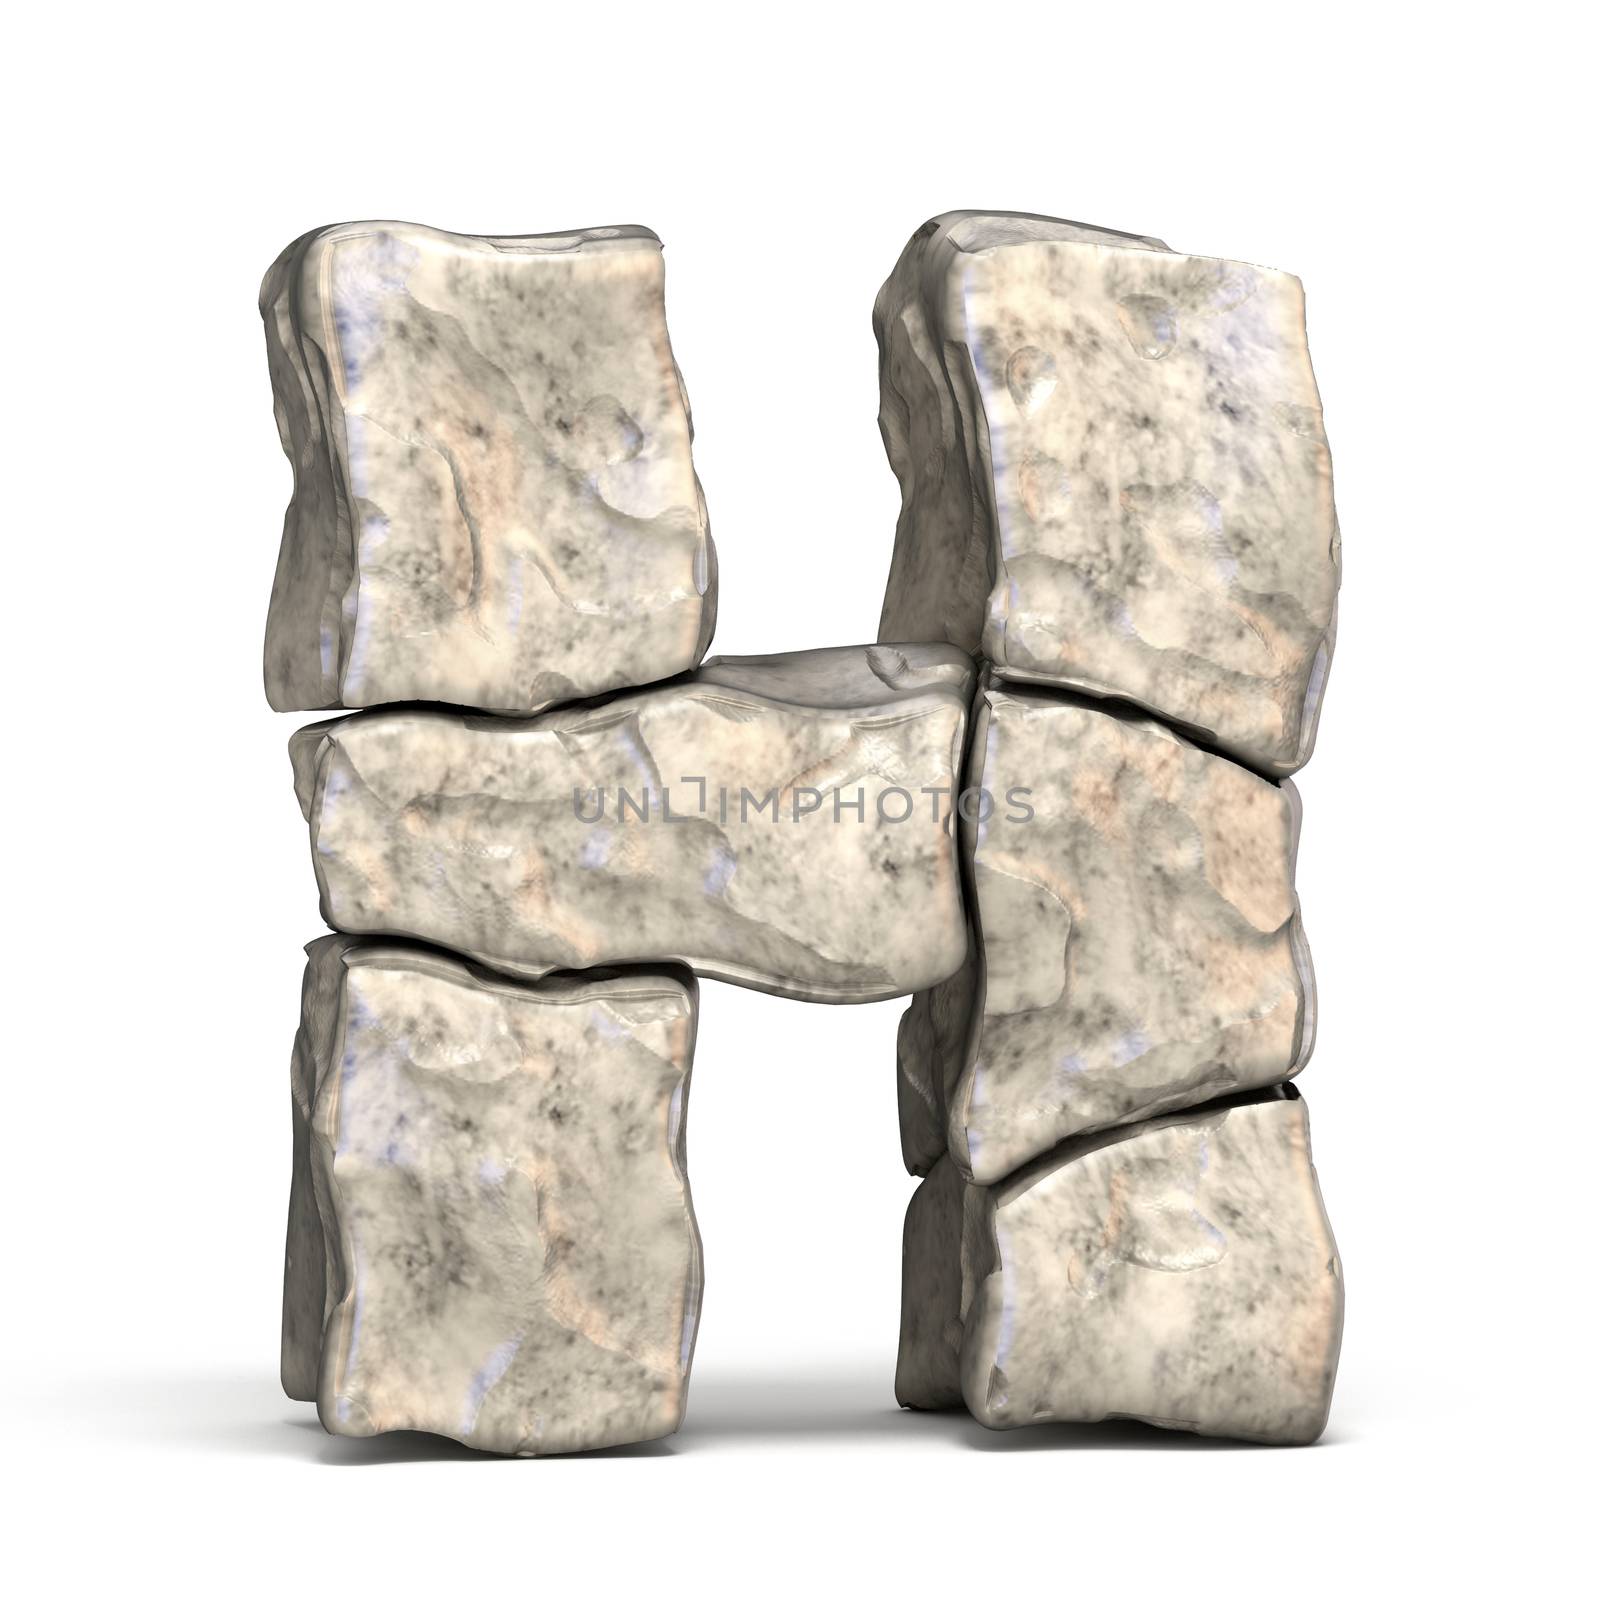 Stone font letter H 3D render illustration isolated on white background